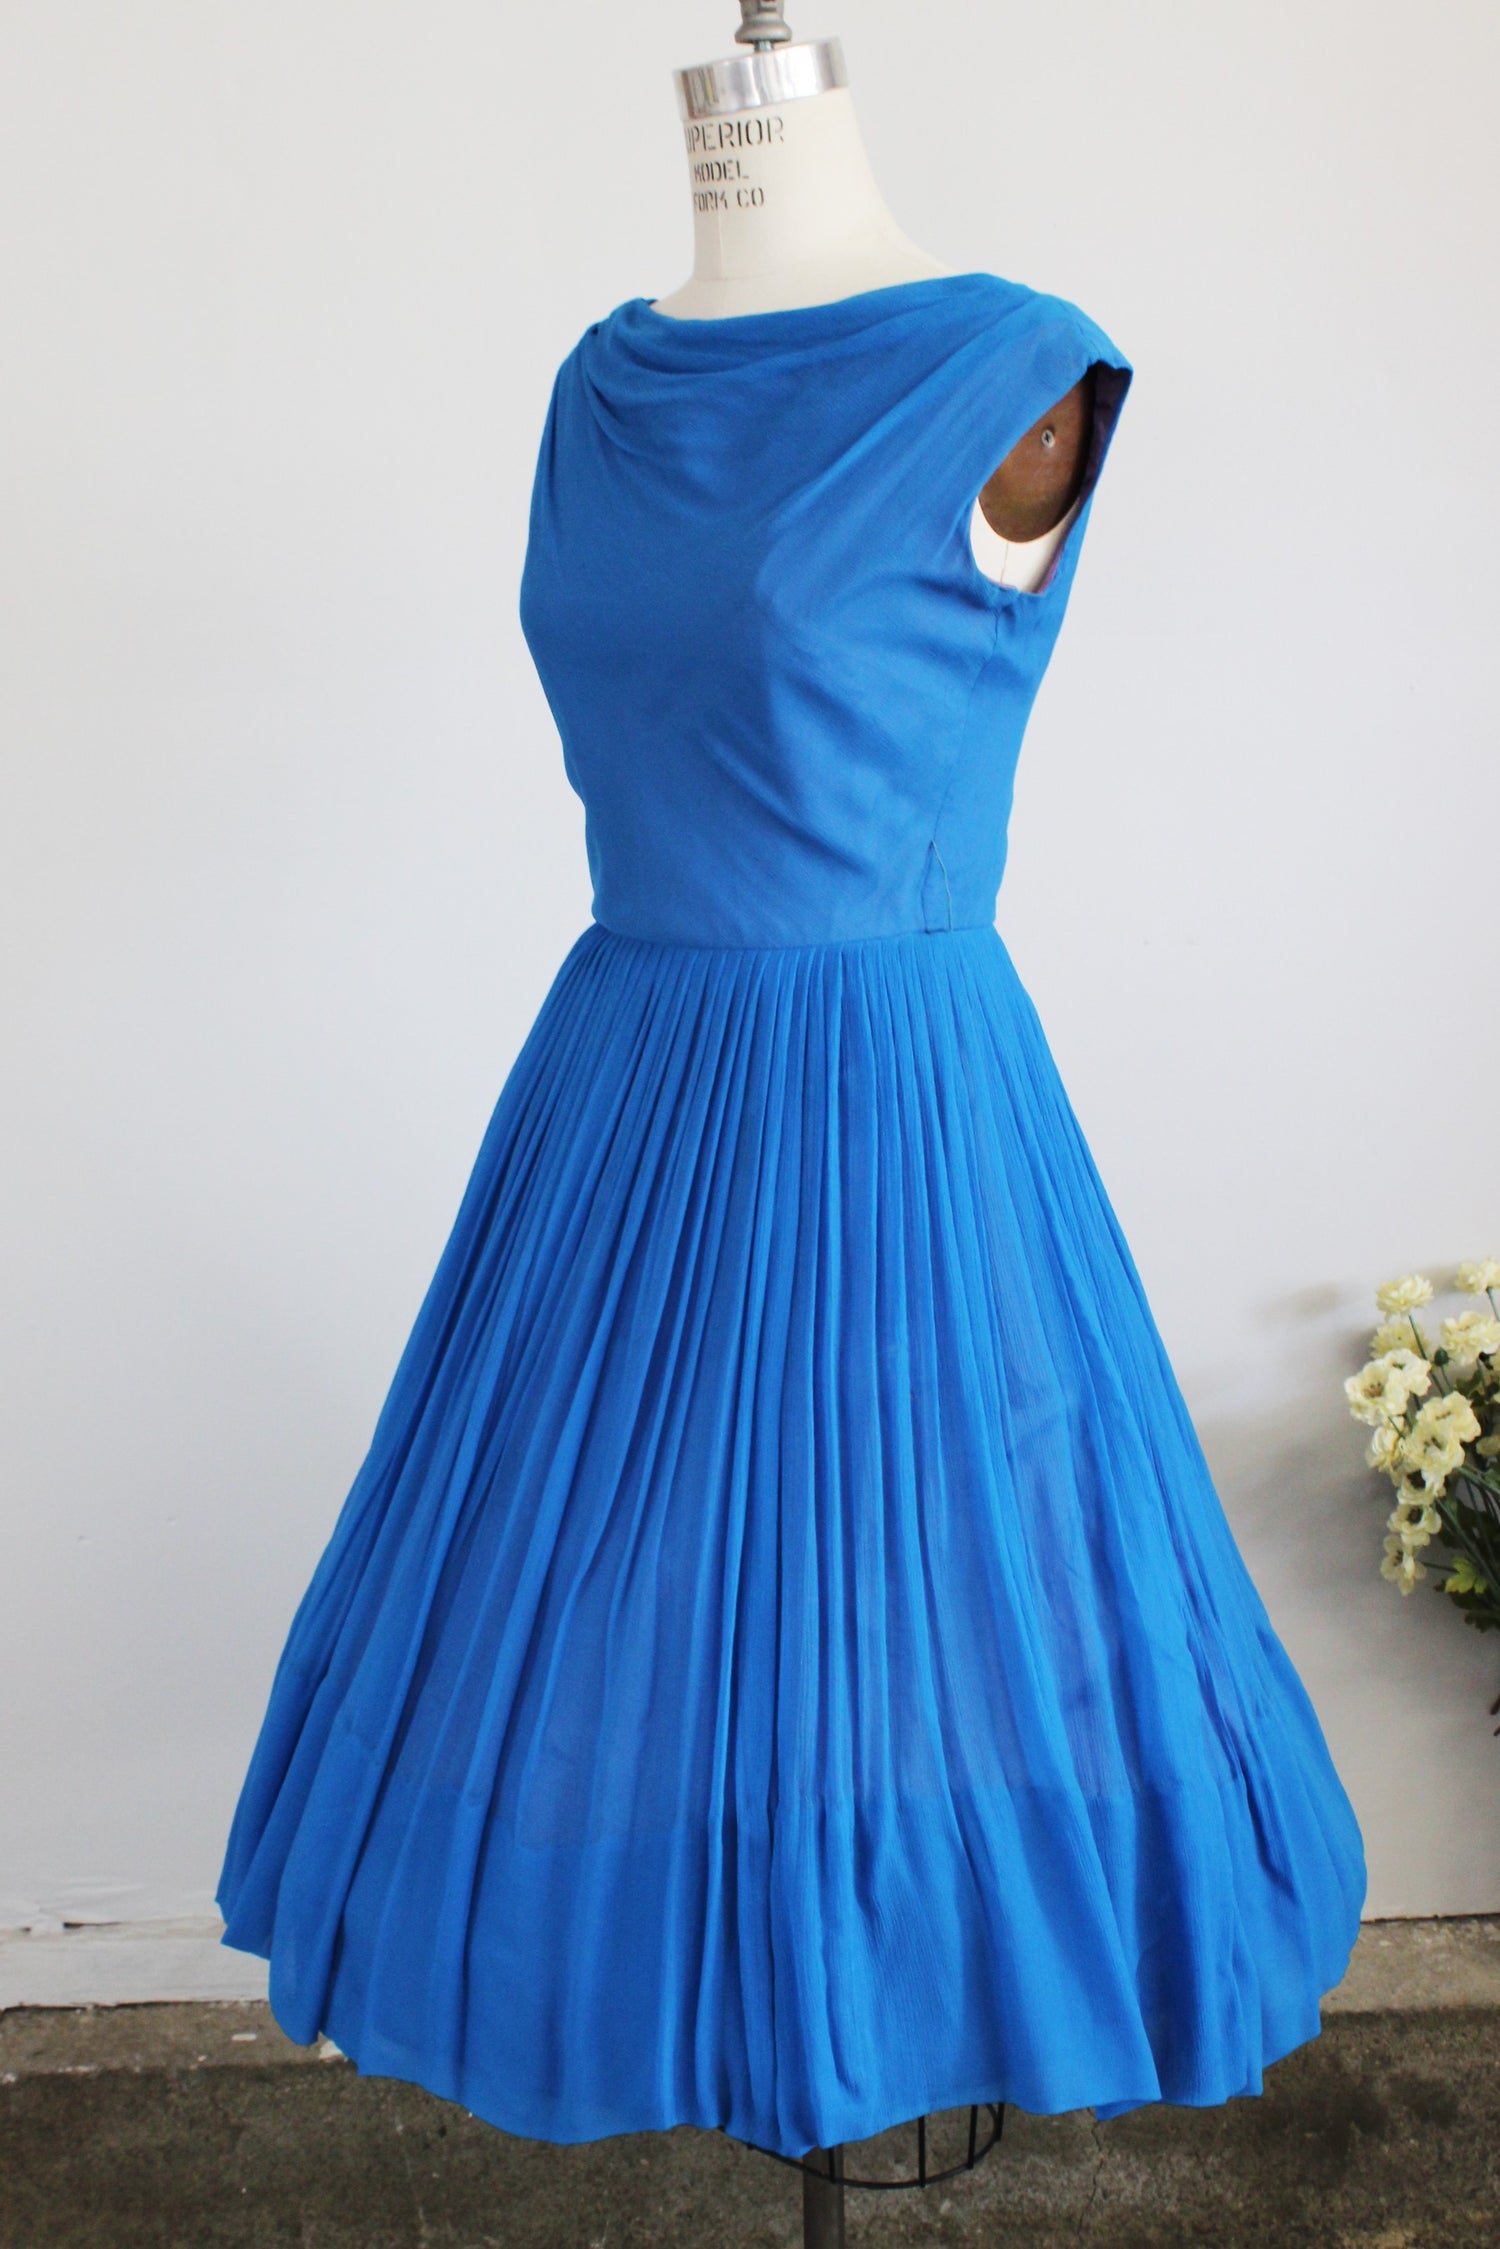 Vintage 1950s New Look Party Dress Blue Chiffon / Elinor Gay